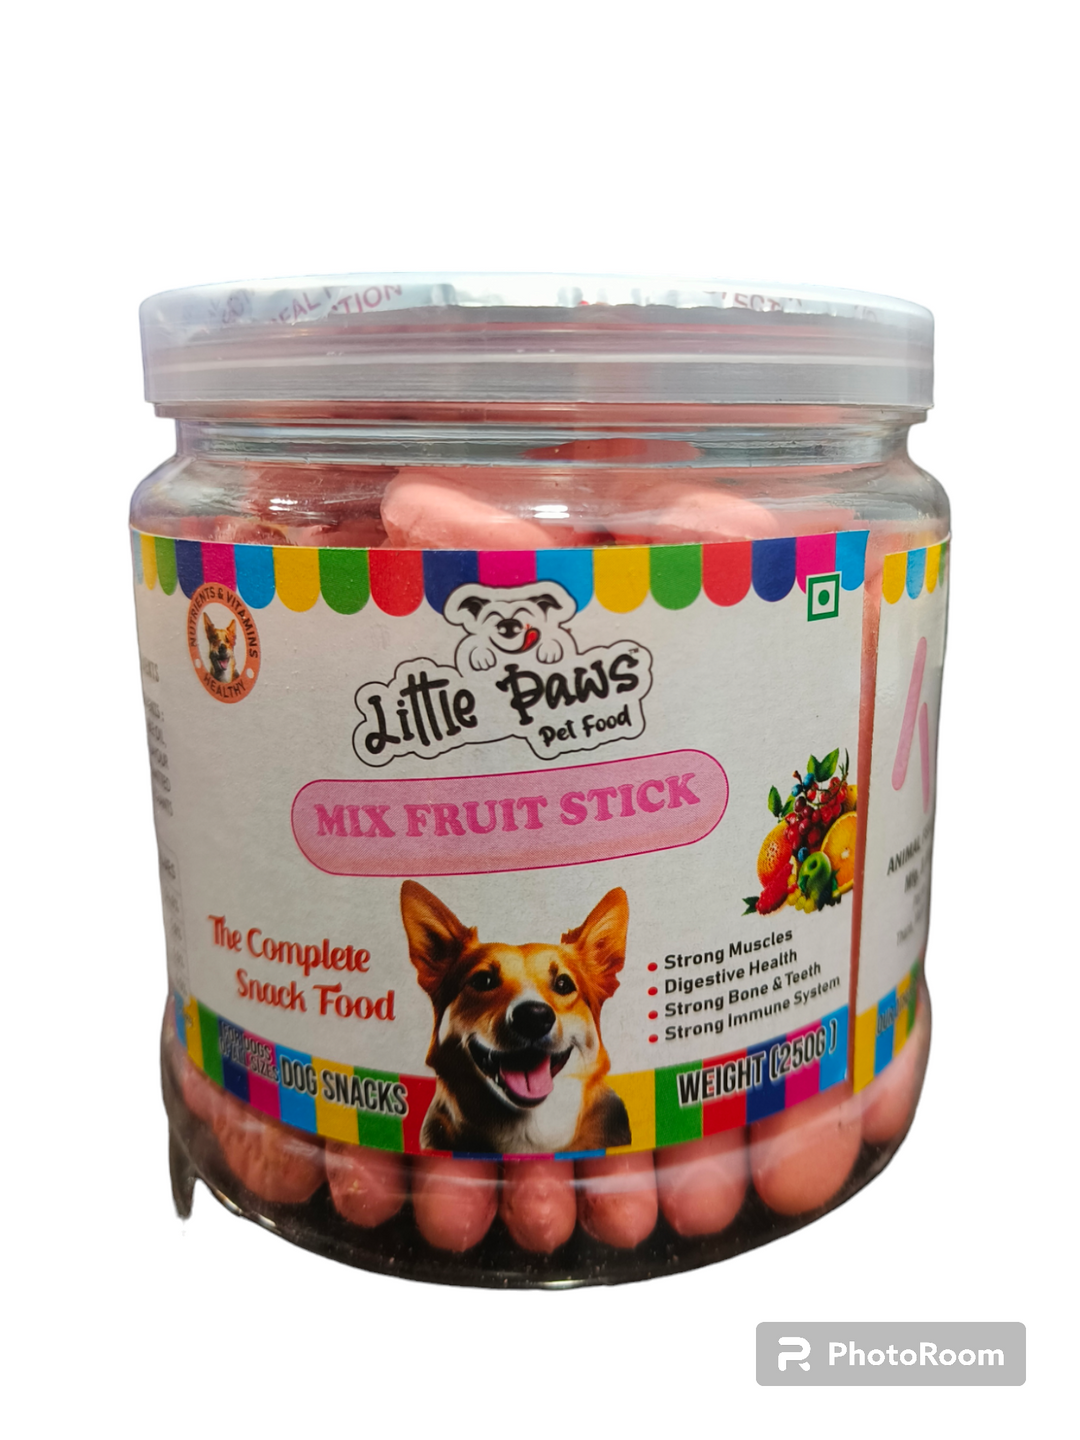 LITTLE PAWS Mix Fruit Stick Biscuits Jar 250 Grms –VEG